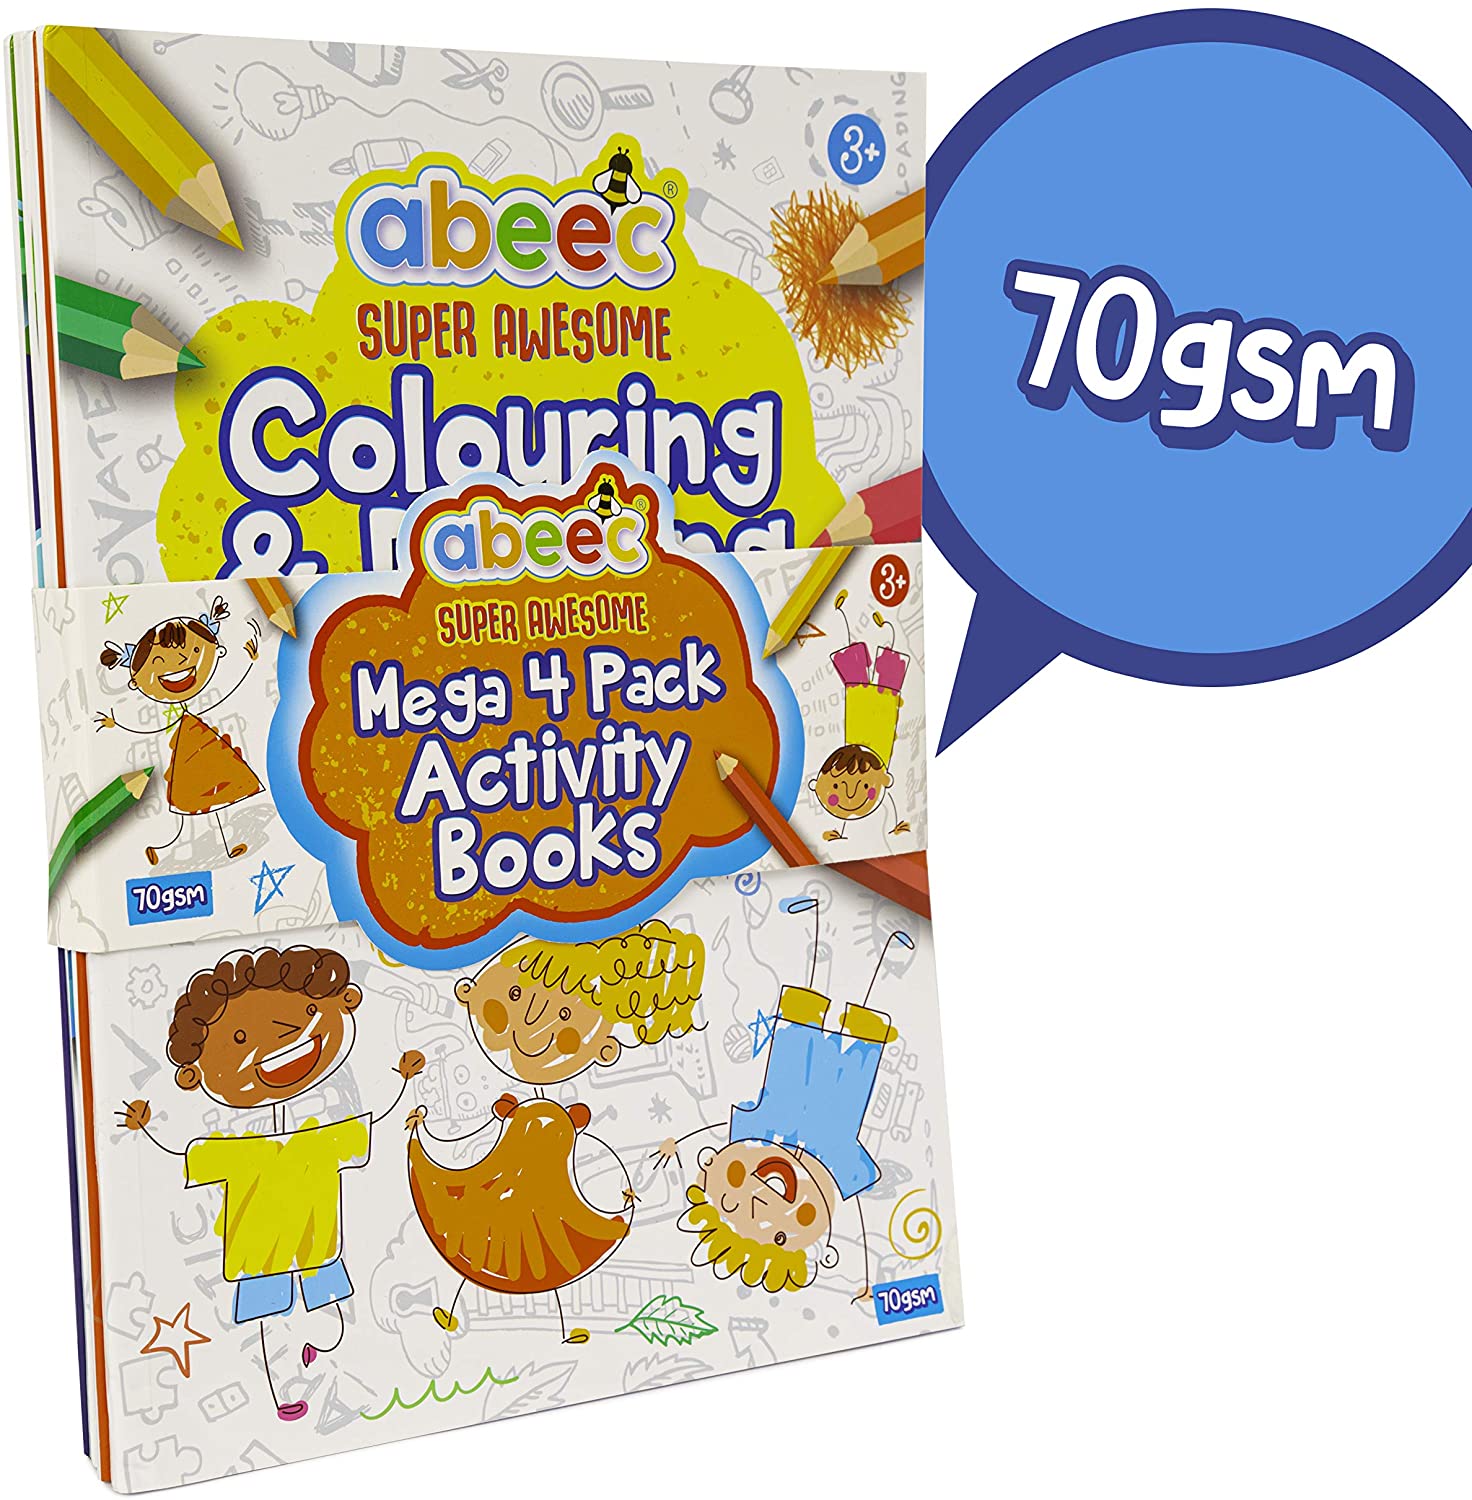 abeec Activity Books for Children features